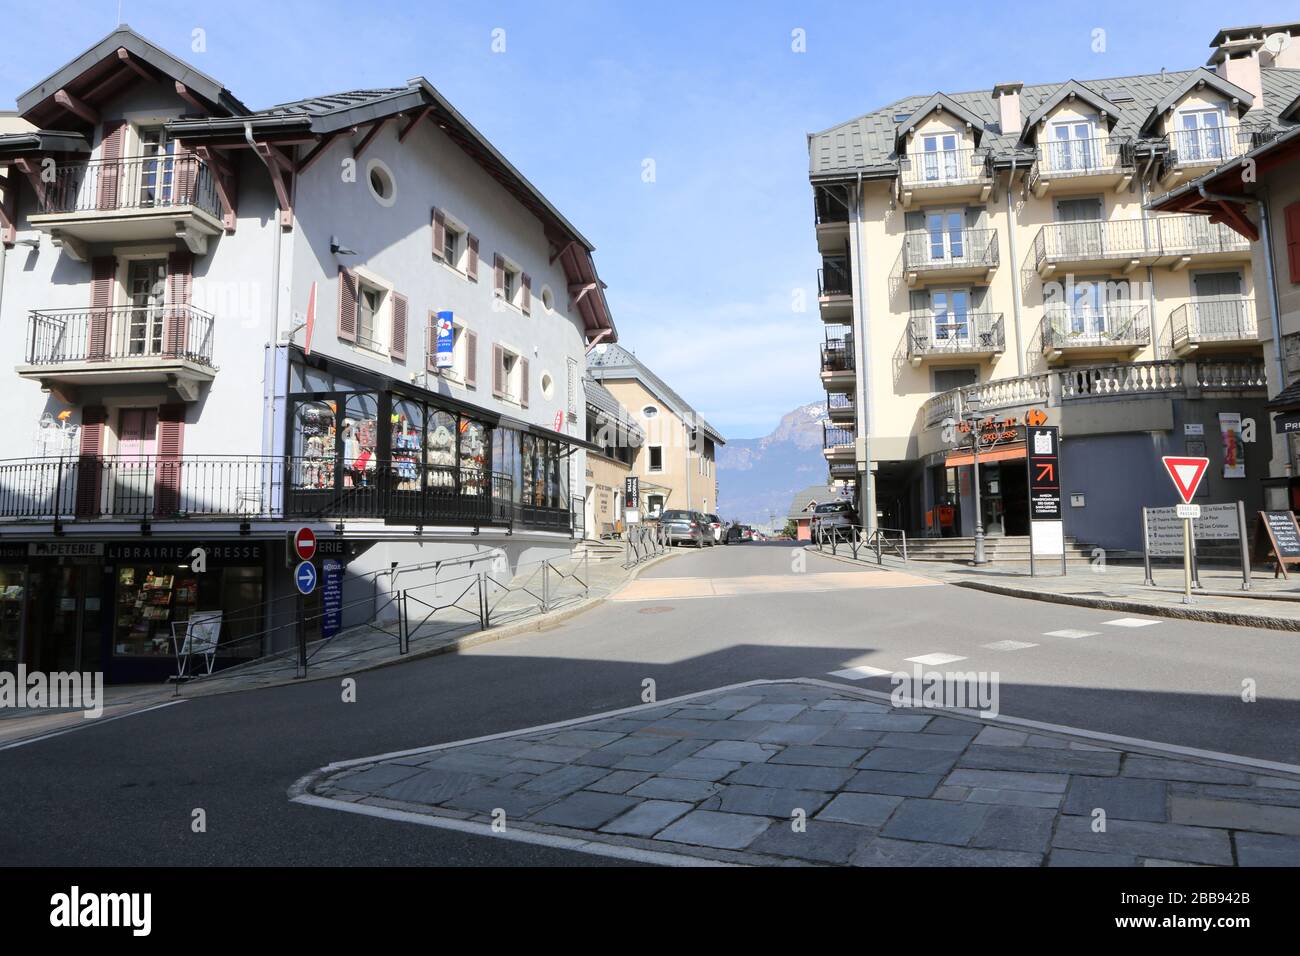 Centro-ville. Confinamento. Coronavirus. Covid-19. Saint-Gervais-les-Bains. Alta Savoia. Francia. Foto Stock